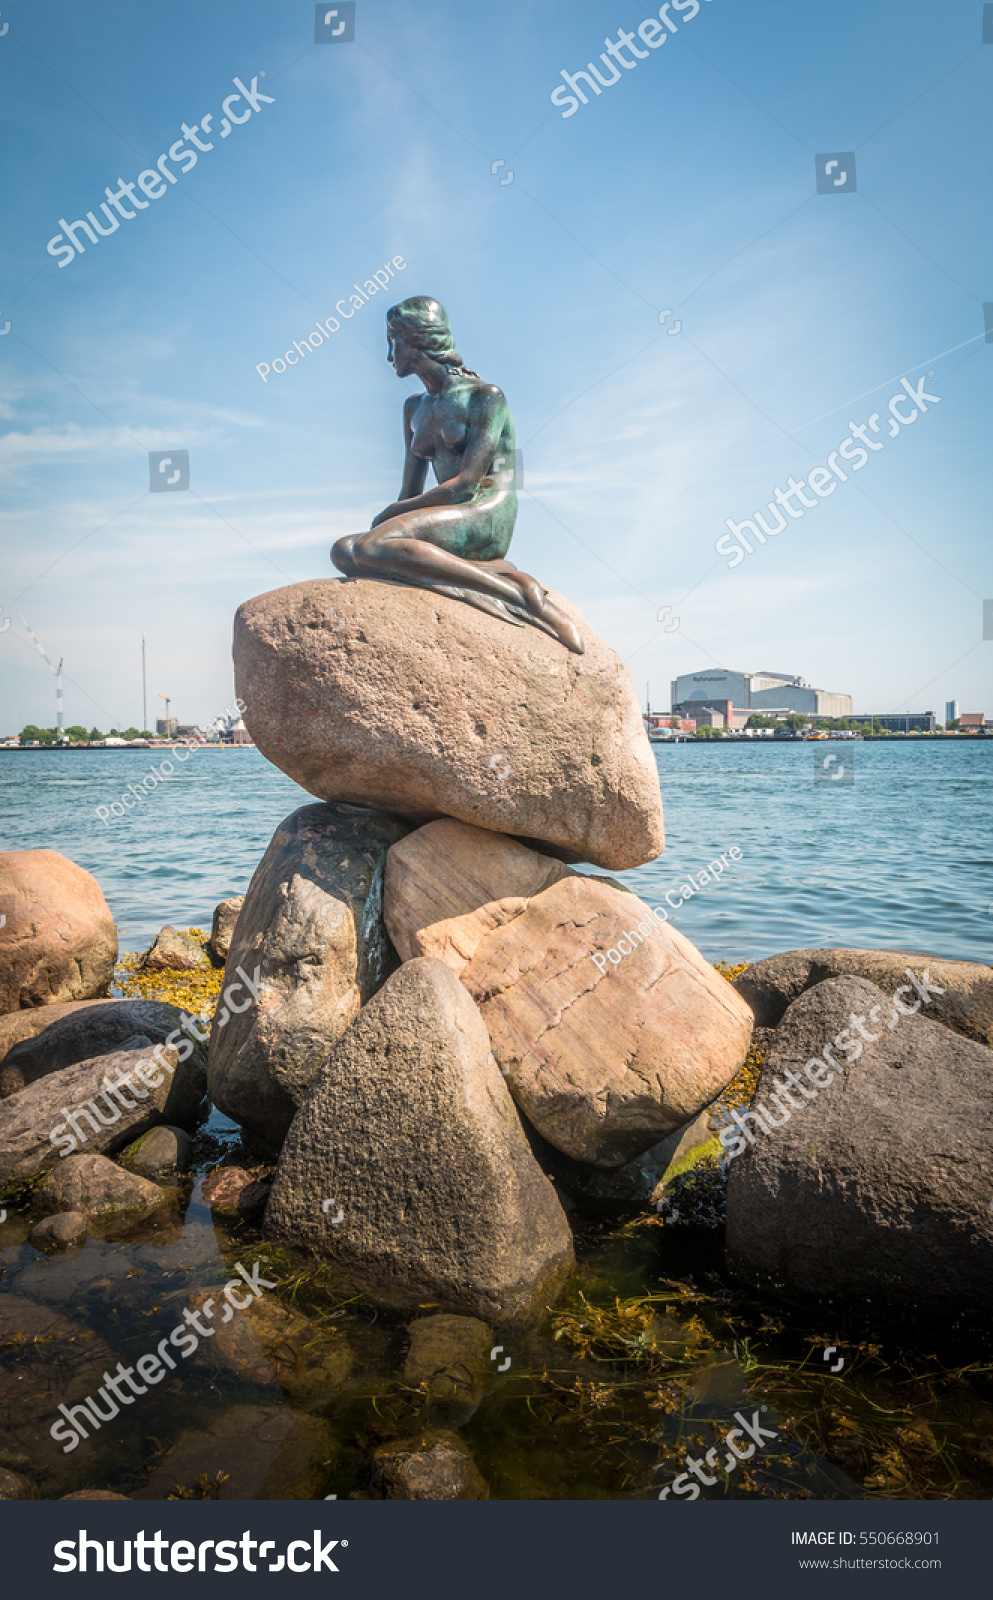 Little Mermaid Statue Copenhagen Stock Photo 550668901 - Shutterstock